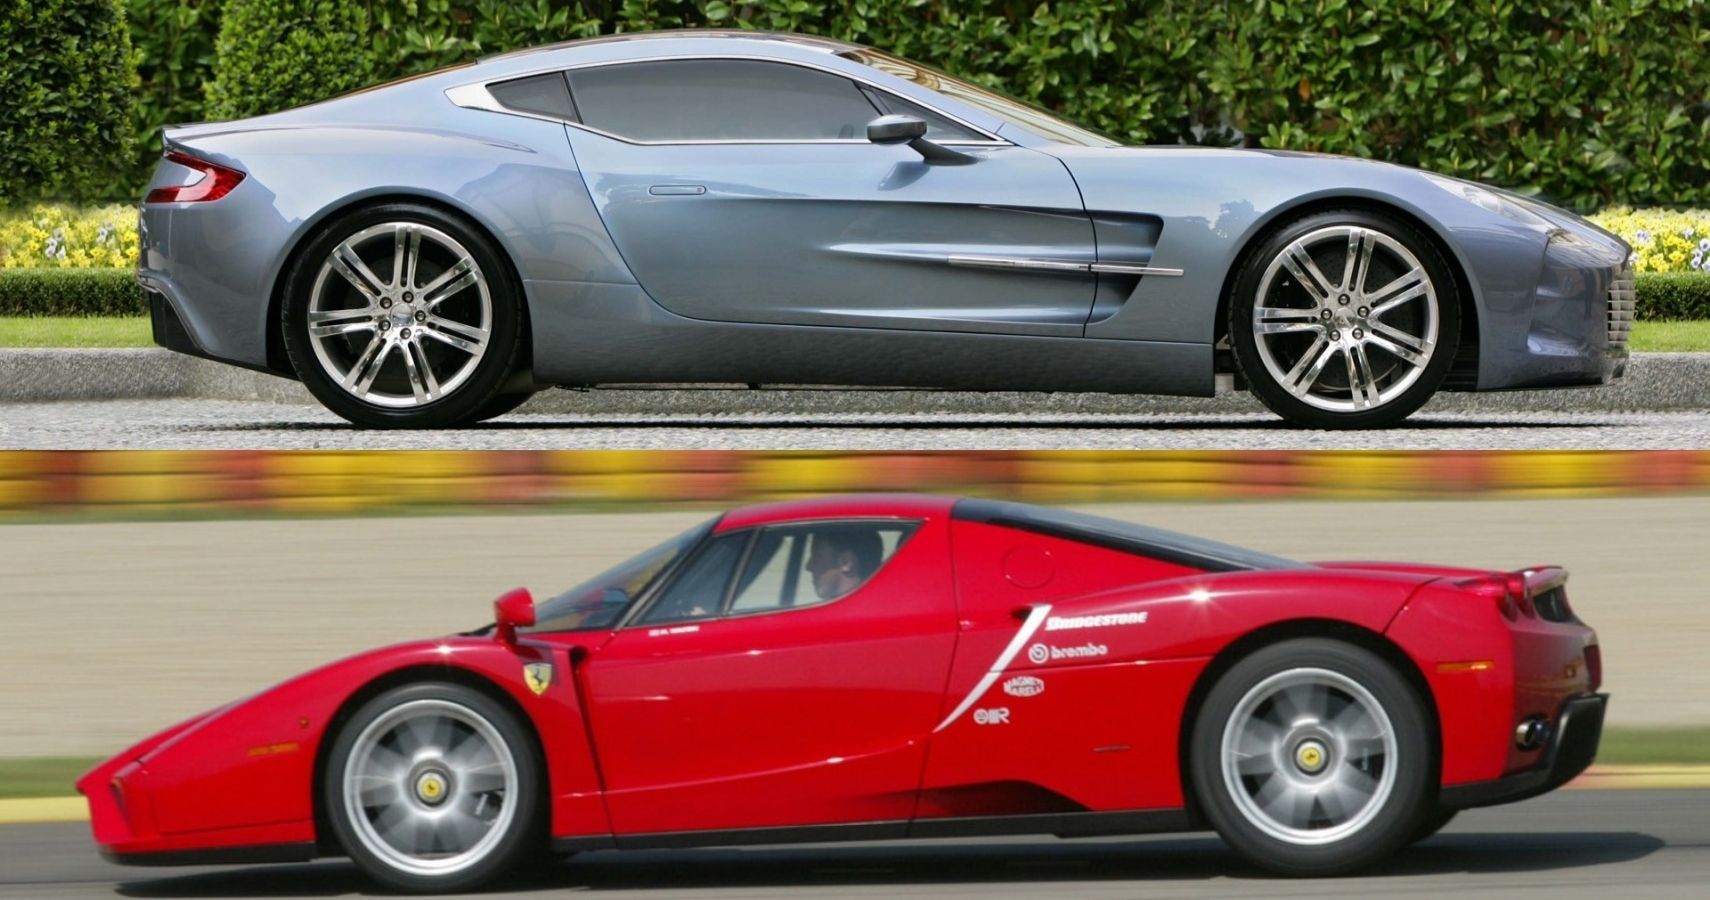 Aston Martin One-77 and Ferrari Enzo side-by-side comparison